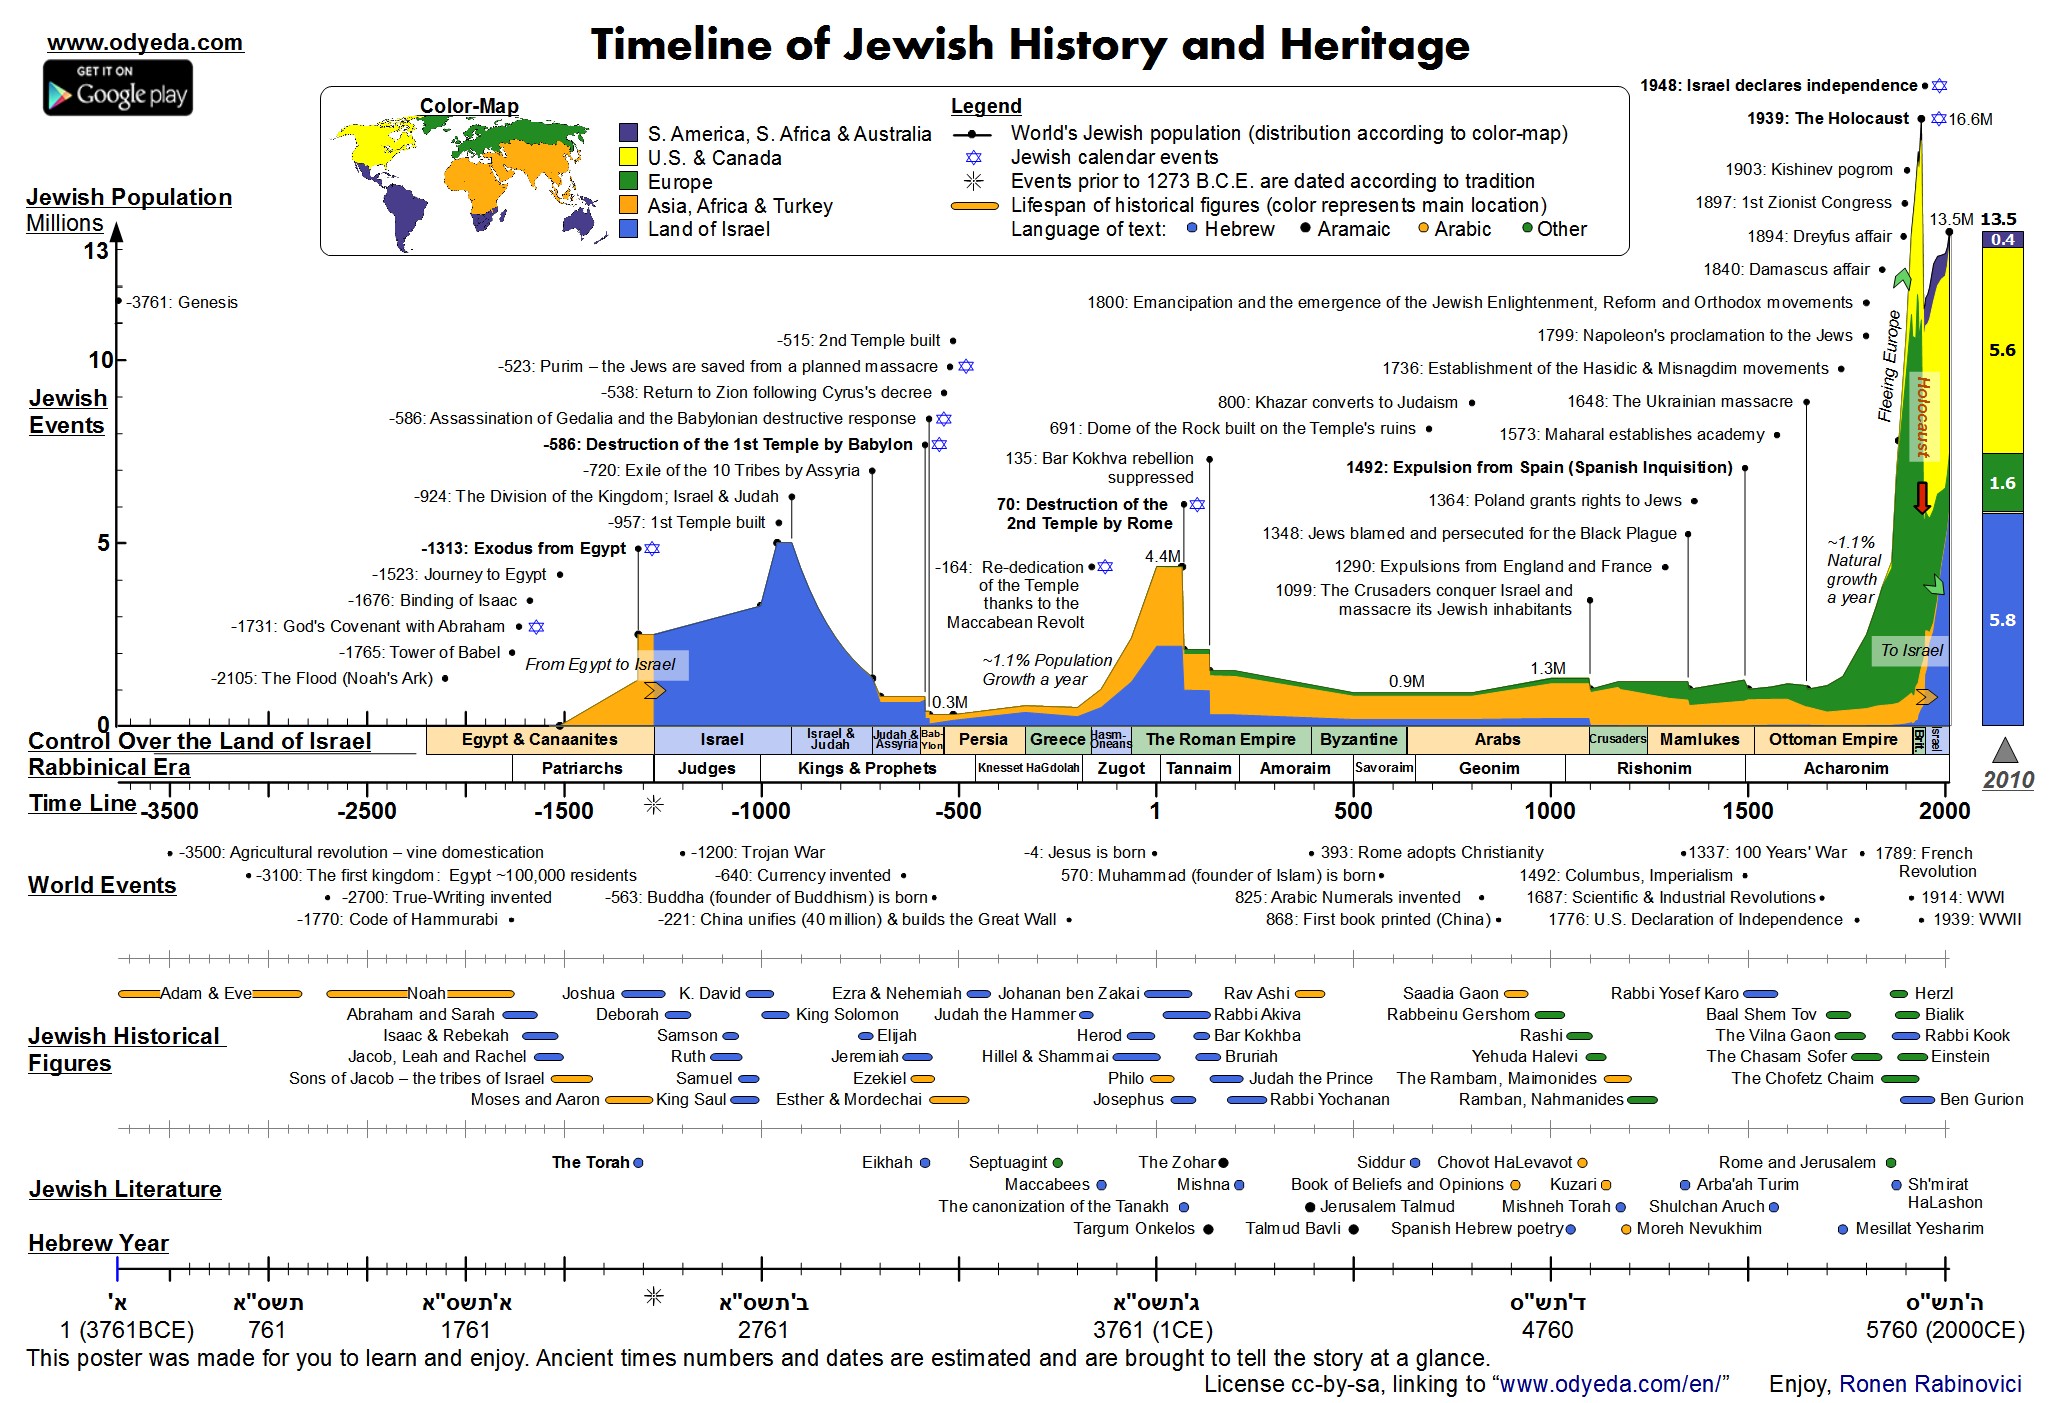 Church History Timeline Chart